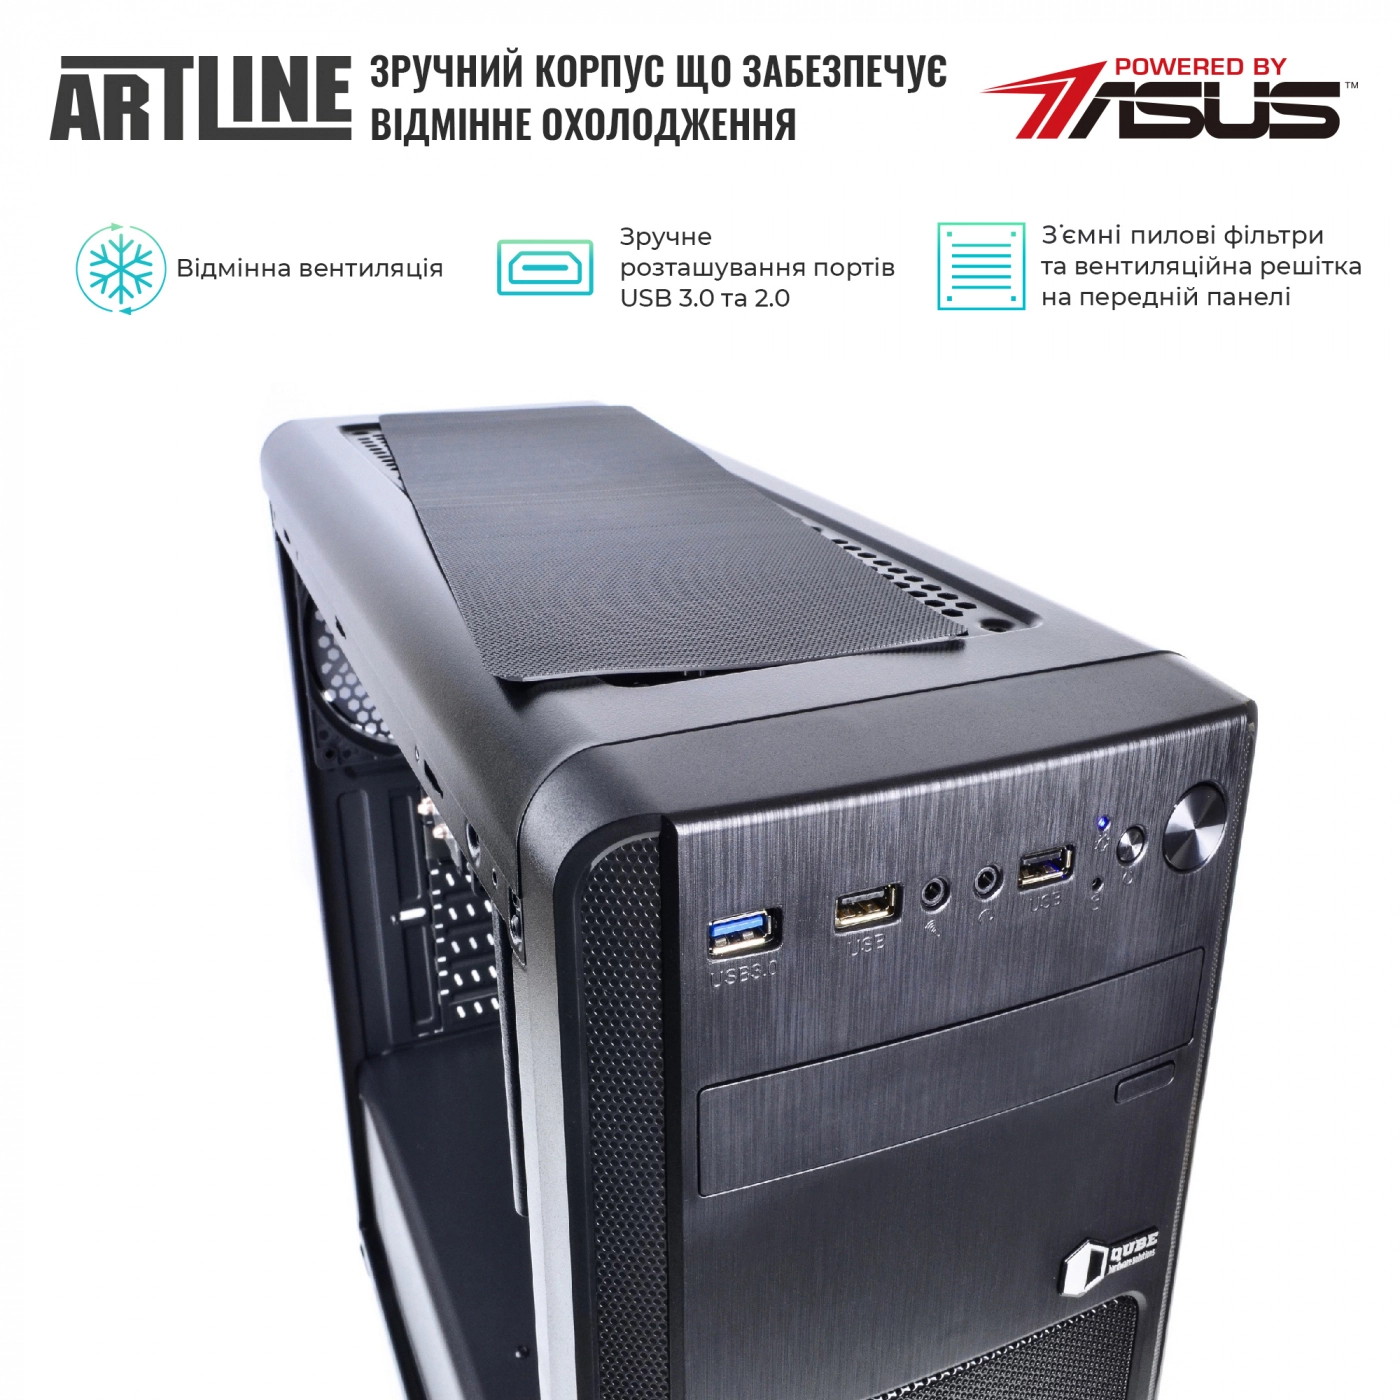 Купити Сервер ARTLINE Business T65v08 - фото 2